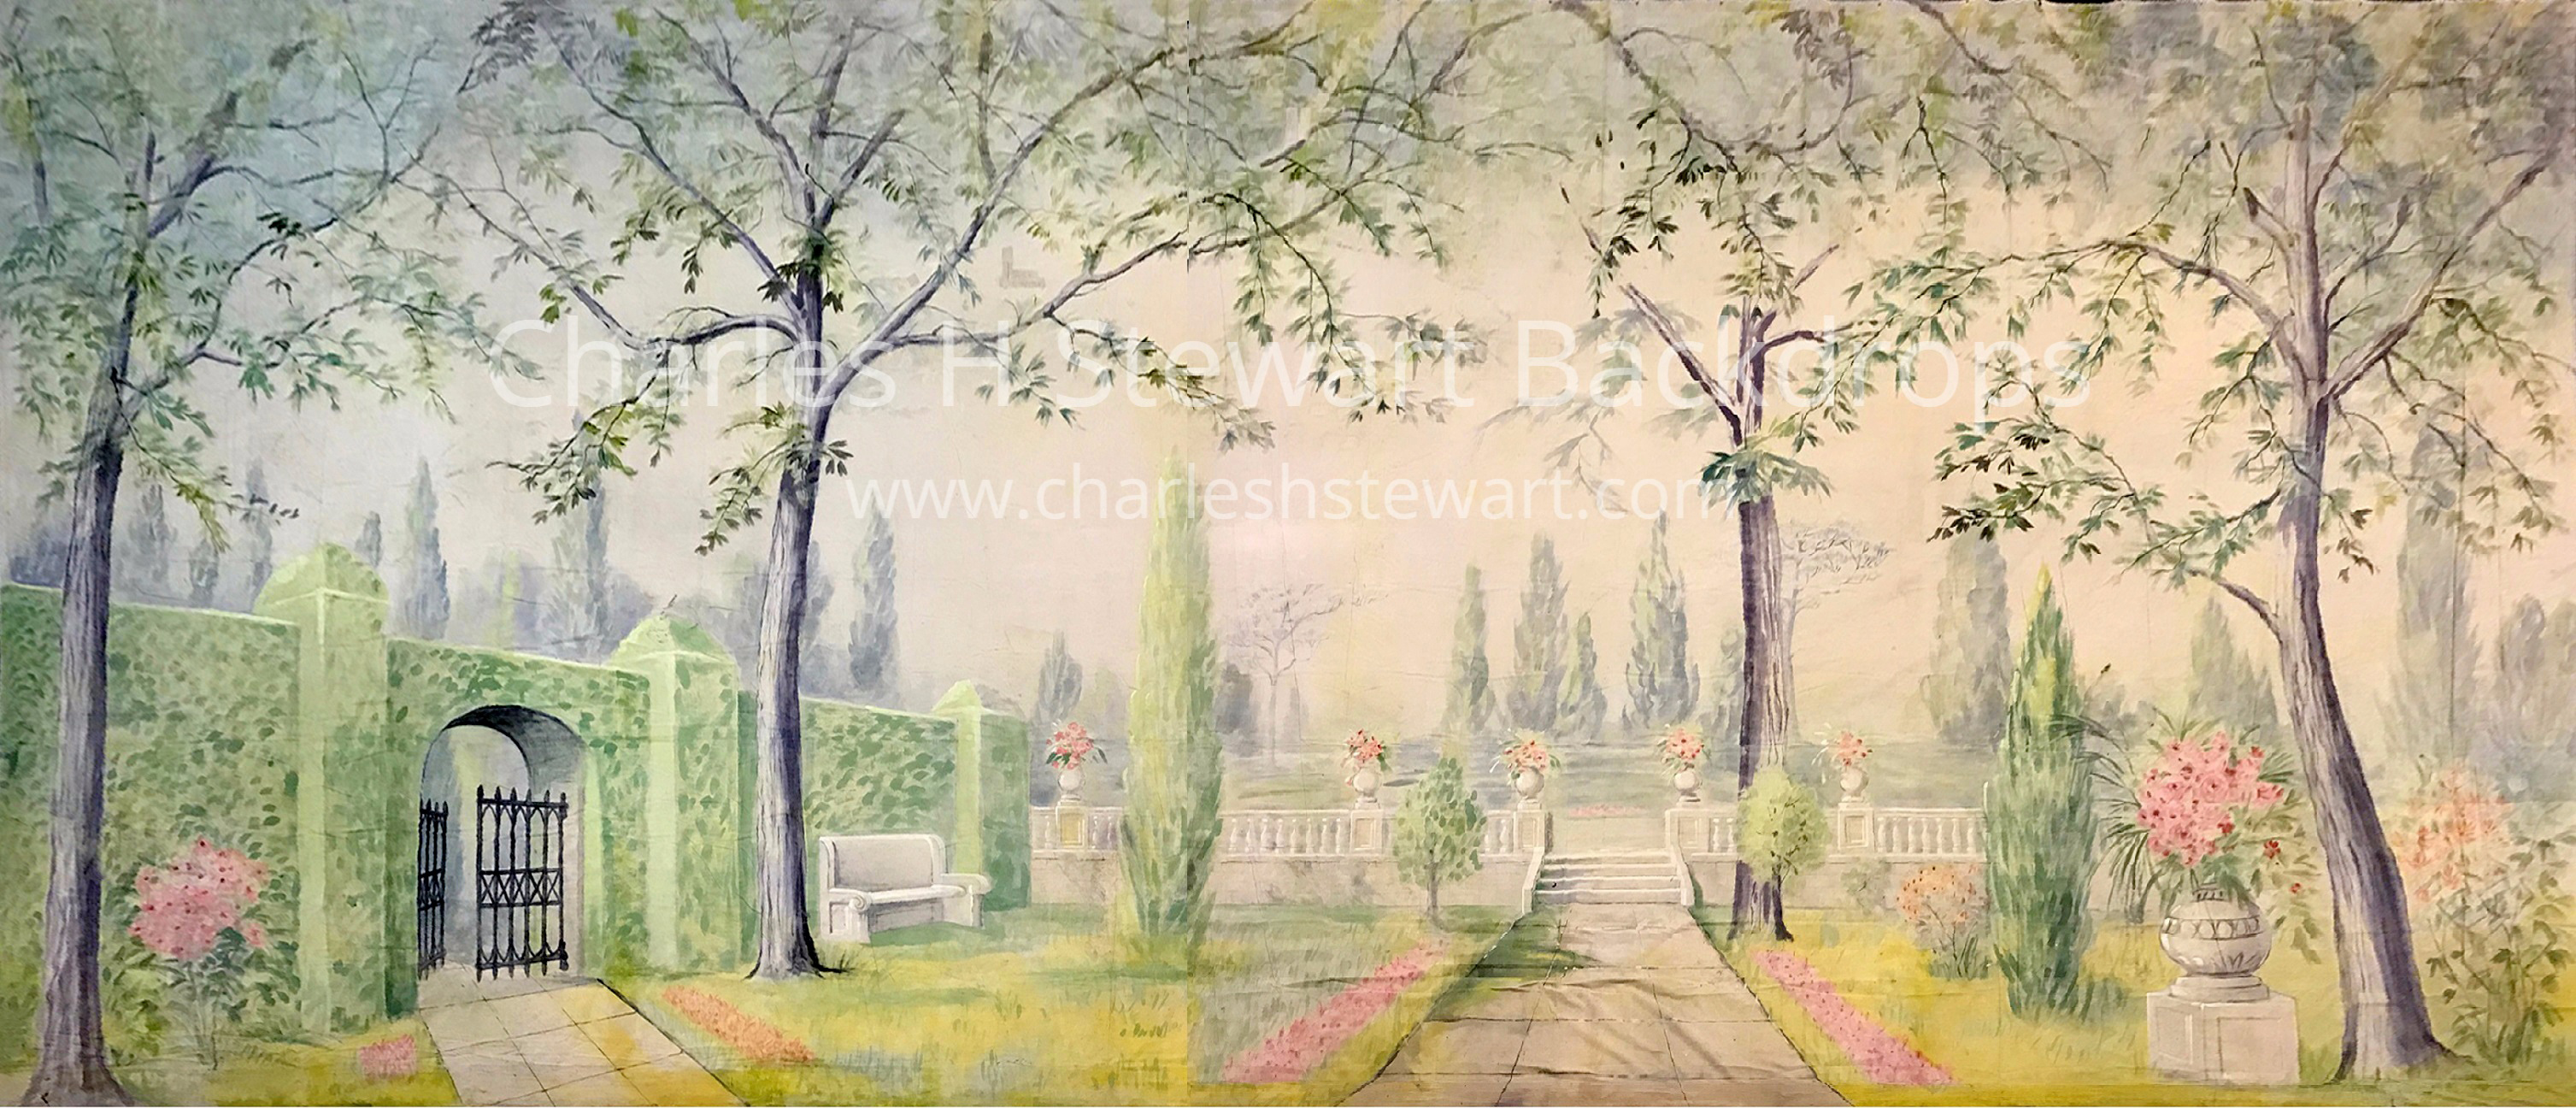 Garden Backdrop - Backdrops by Charles H. Stewart